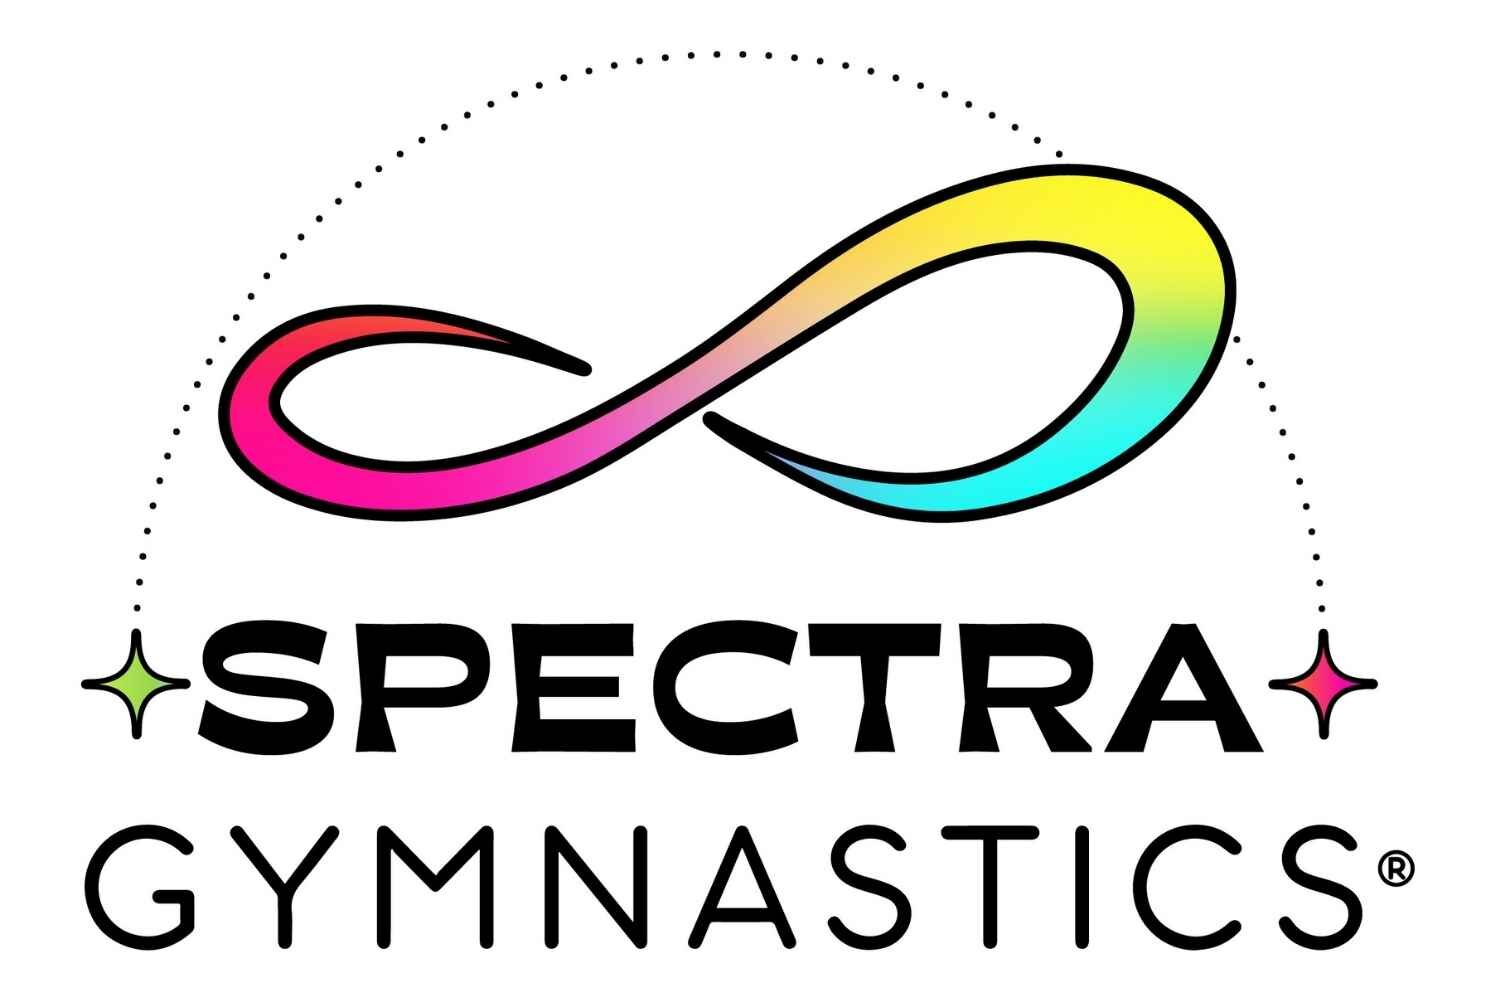 Spectra Gymnastics®